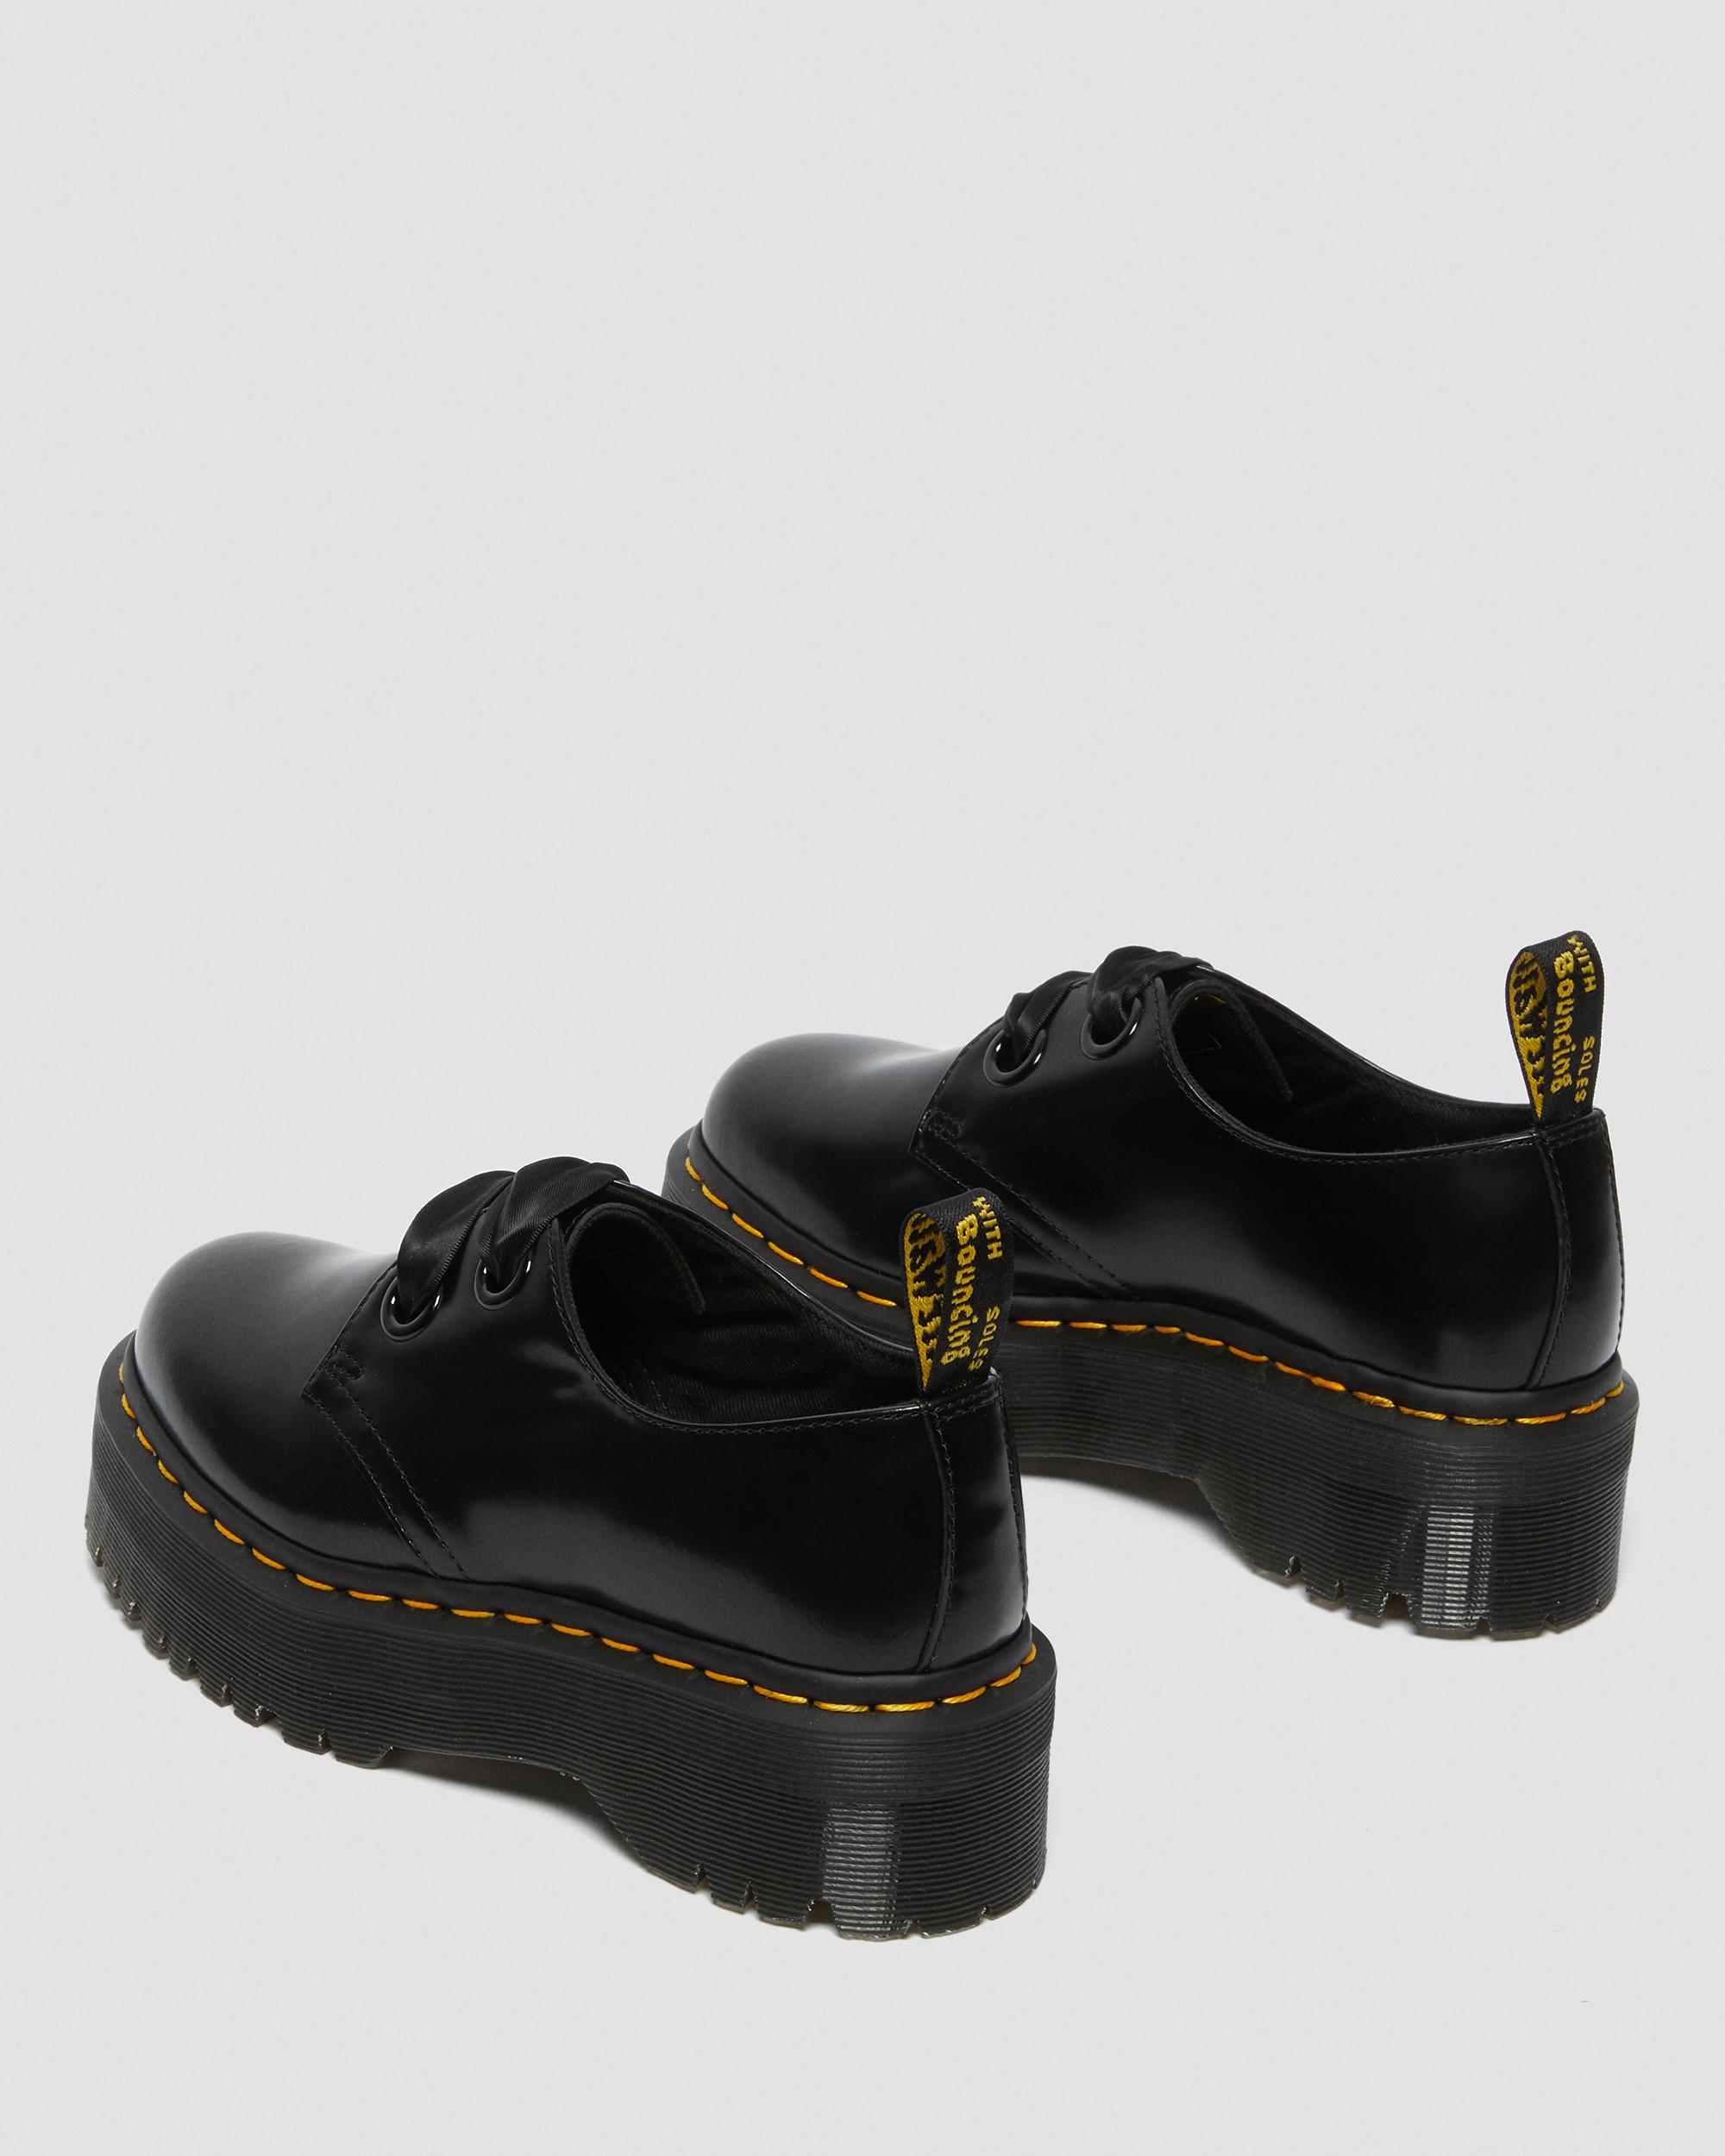 Women's Dr Martens Holly Platform Shoes 10 Black Buttero Leather